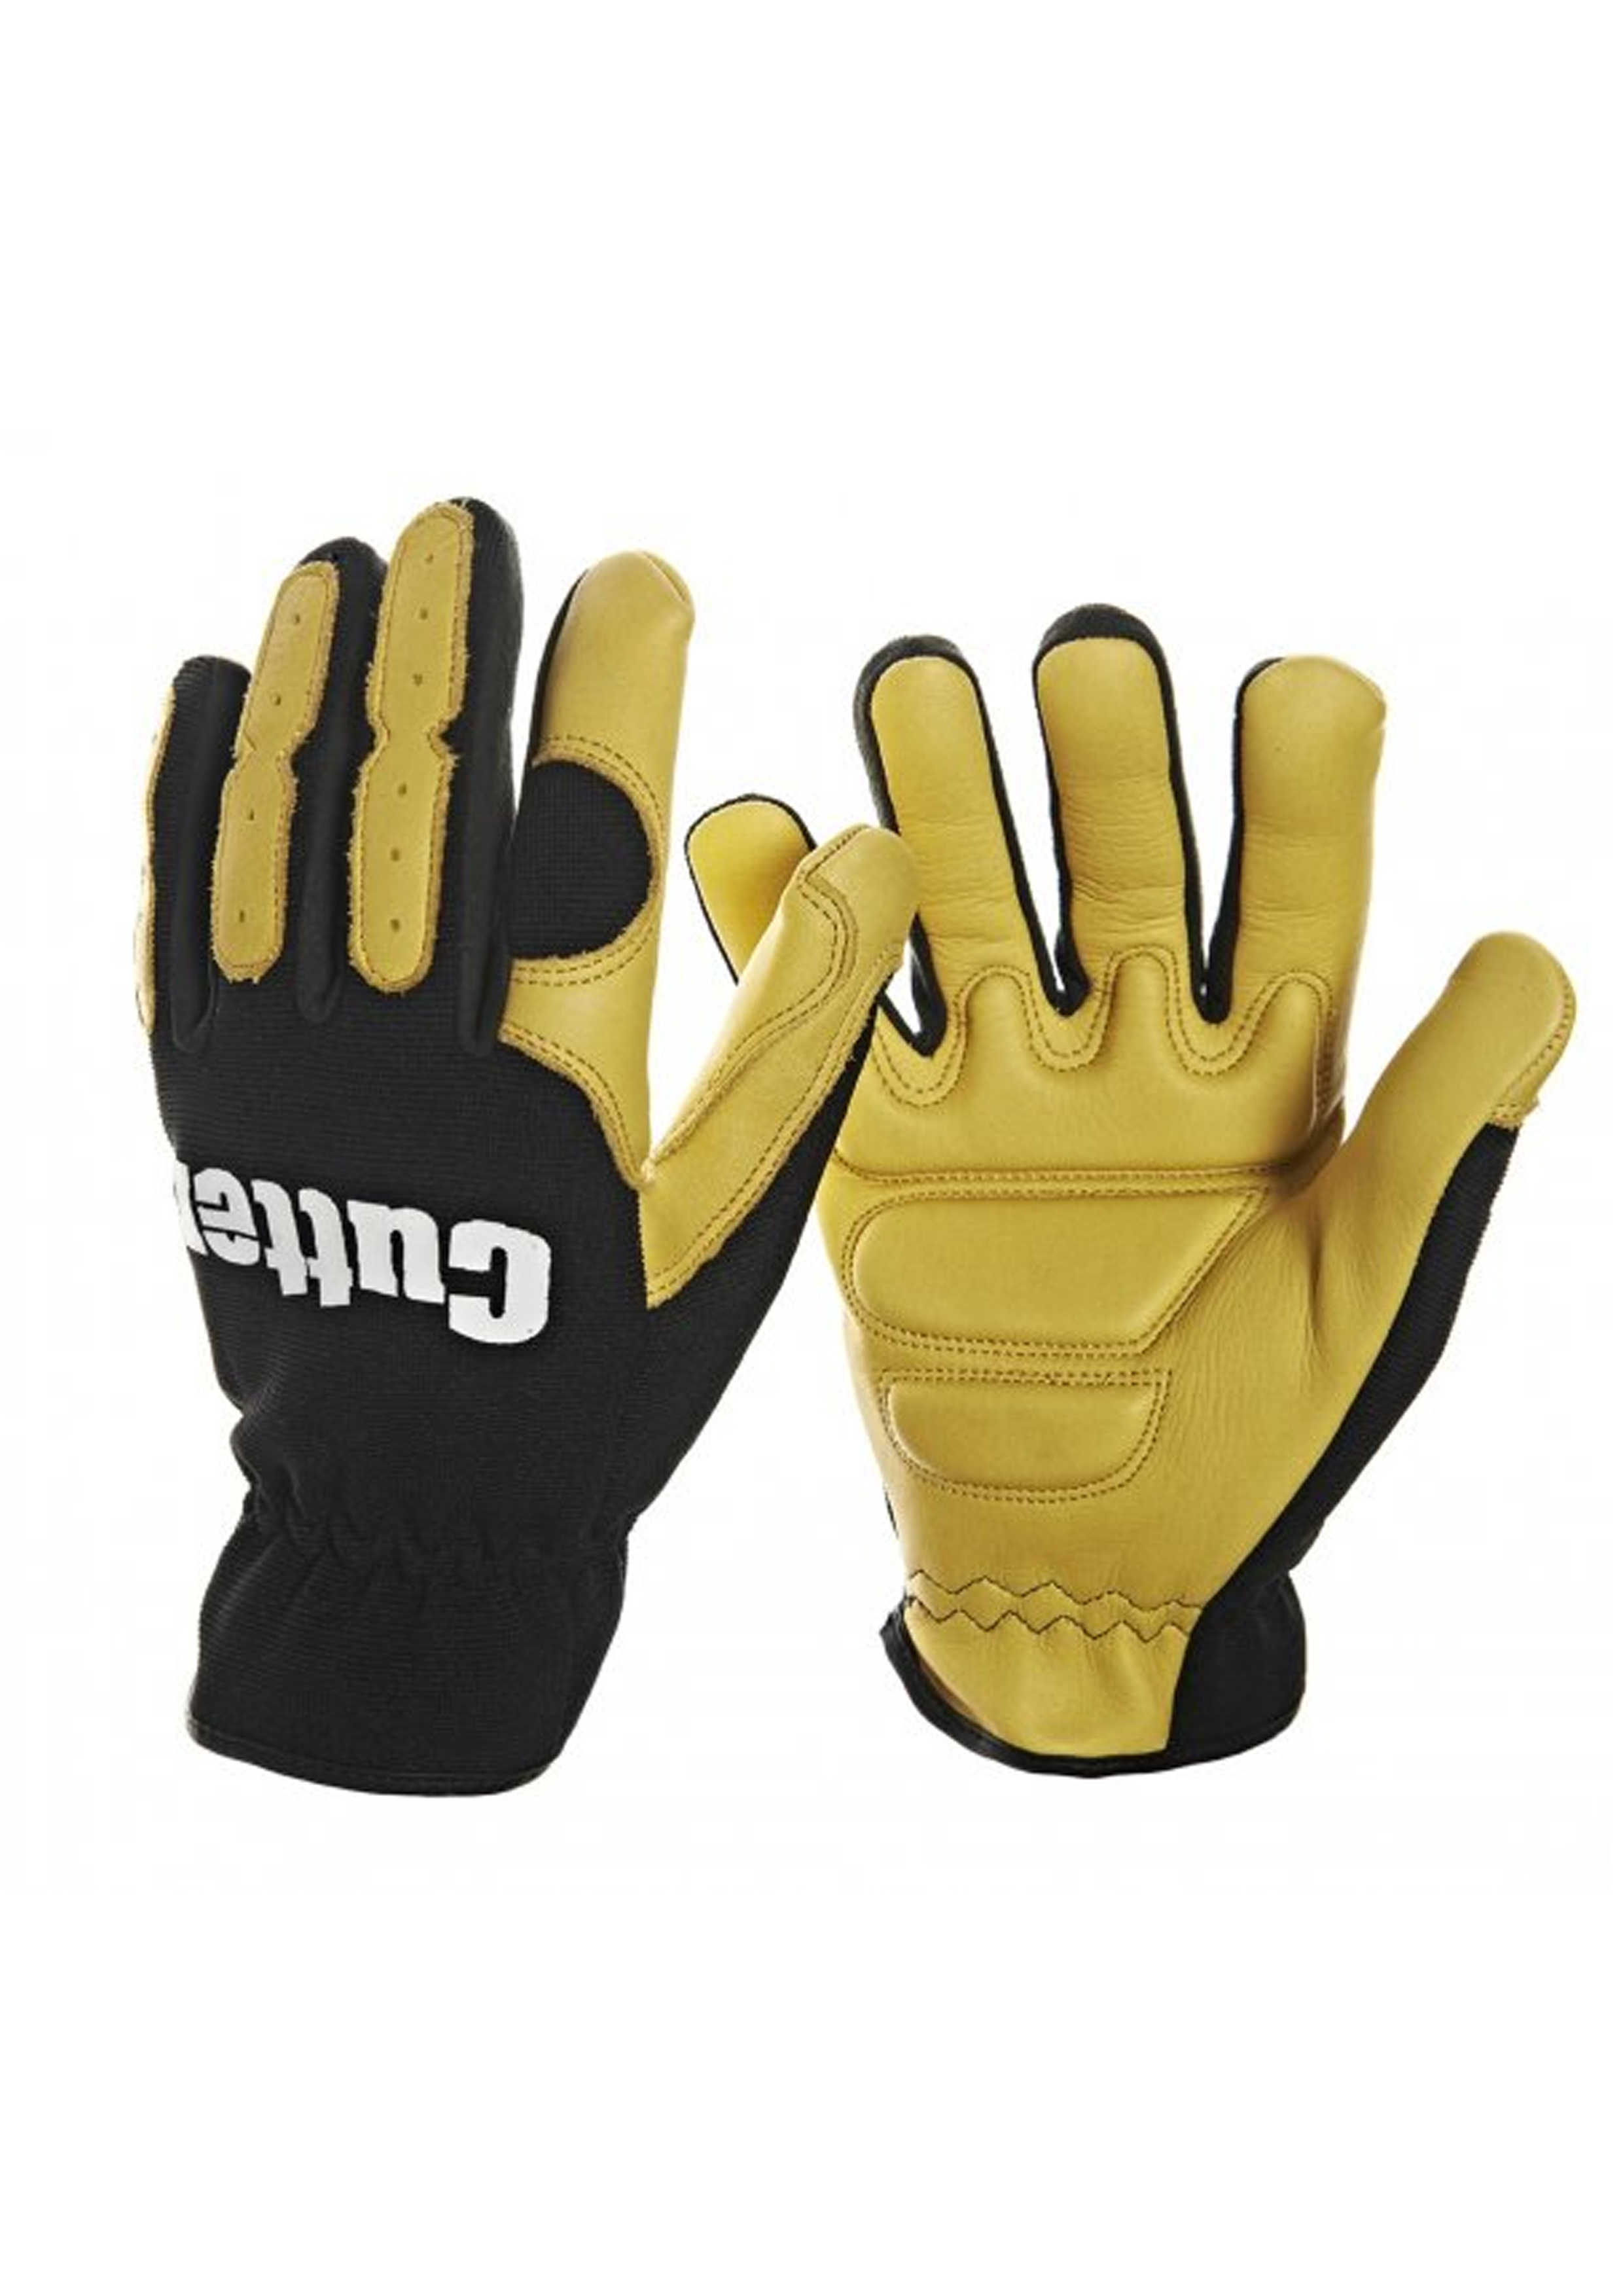 Strimmer & Trimmer Glove Large (CW700)